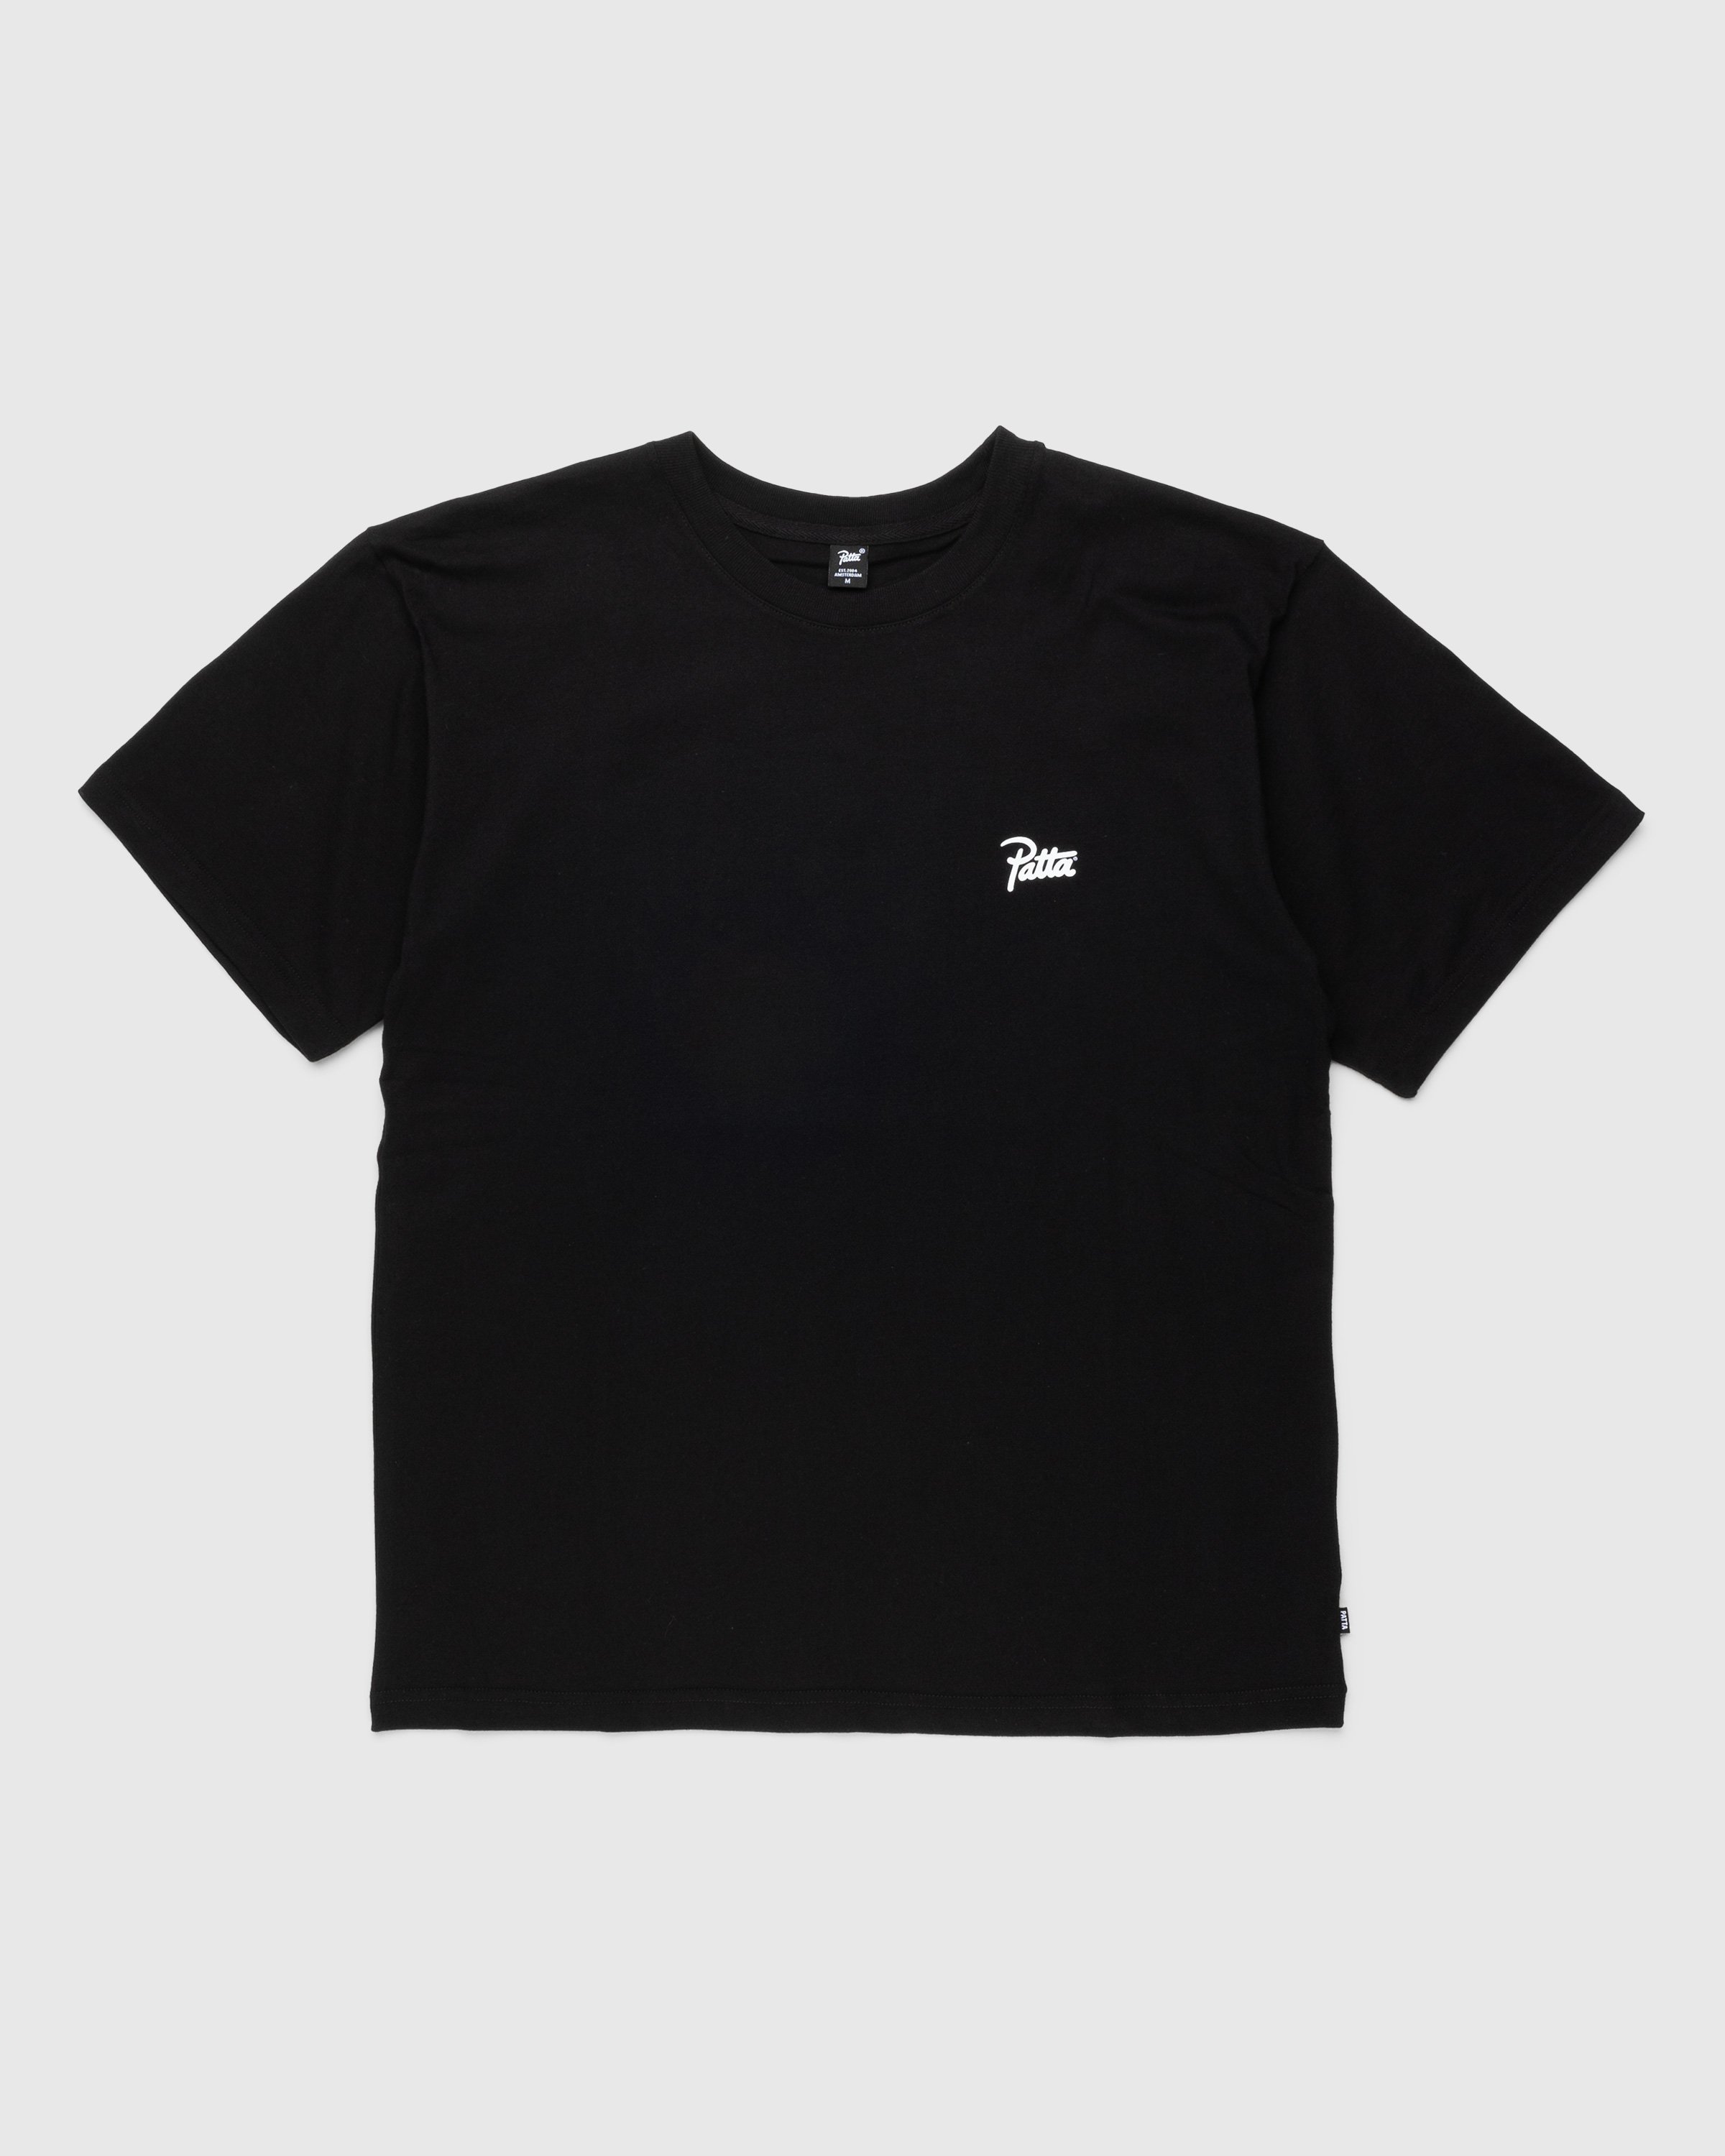 Patta - Pattassium T-Shirt Black - Clothing - Black - Image 1